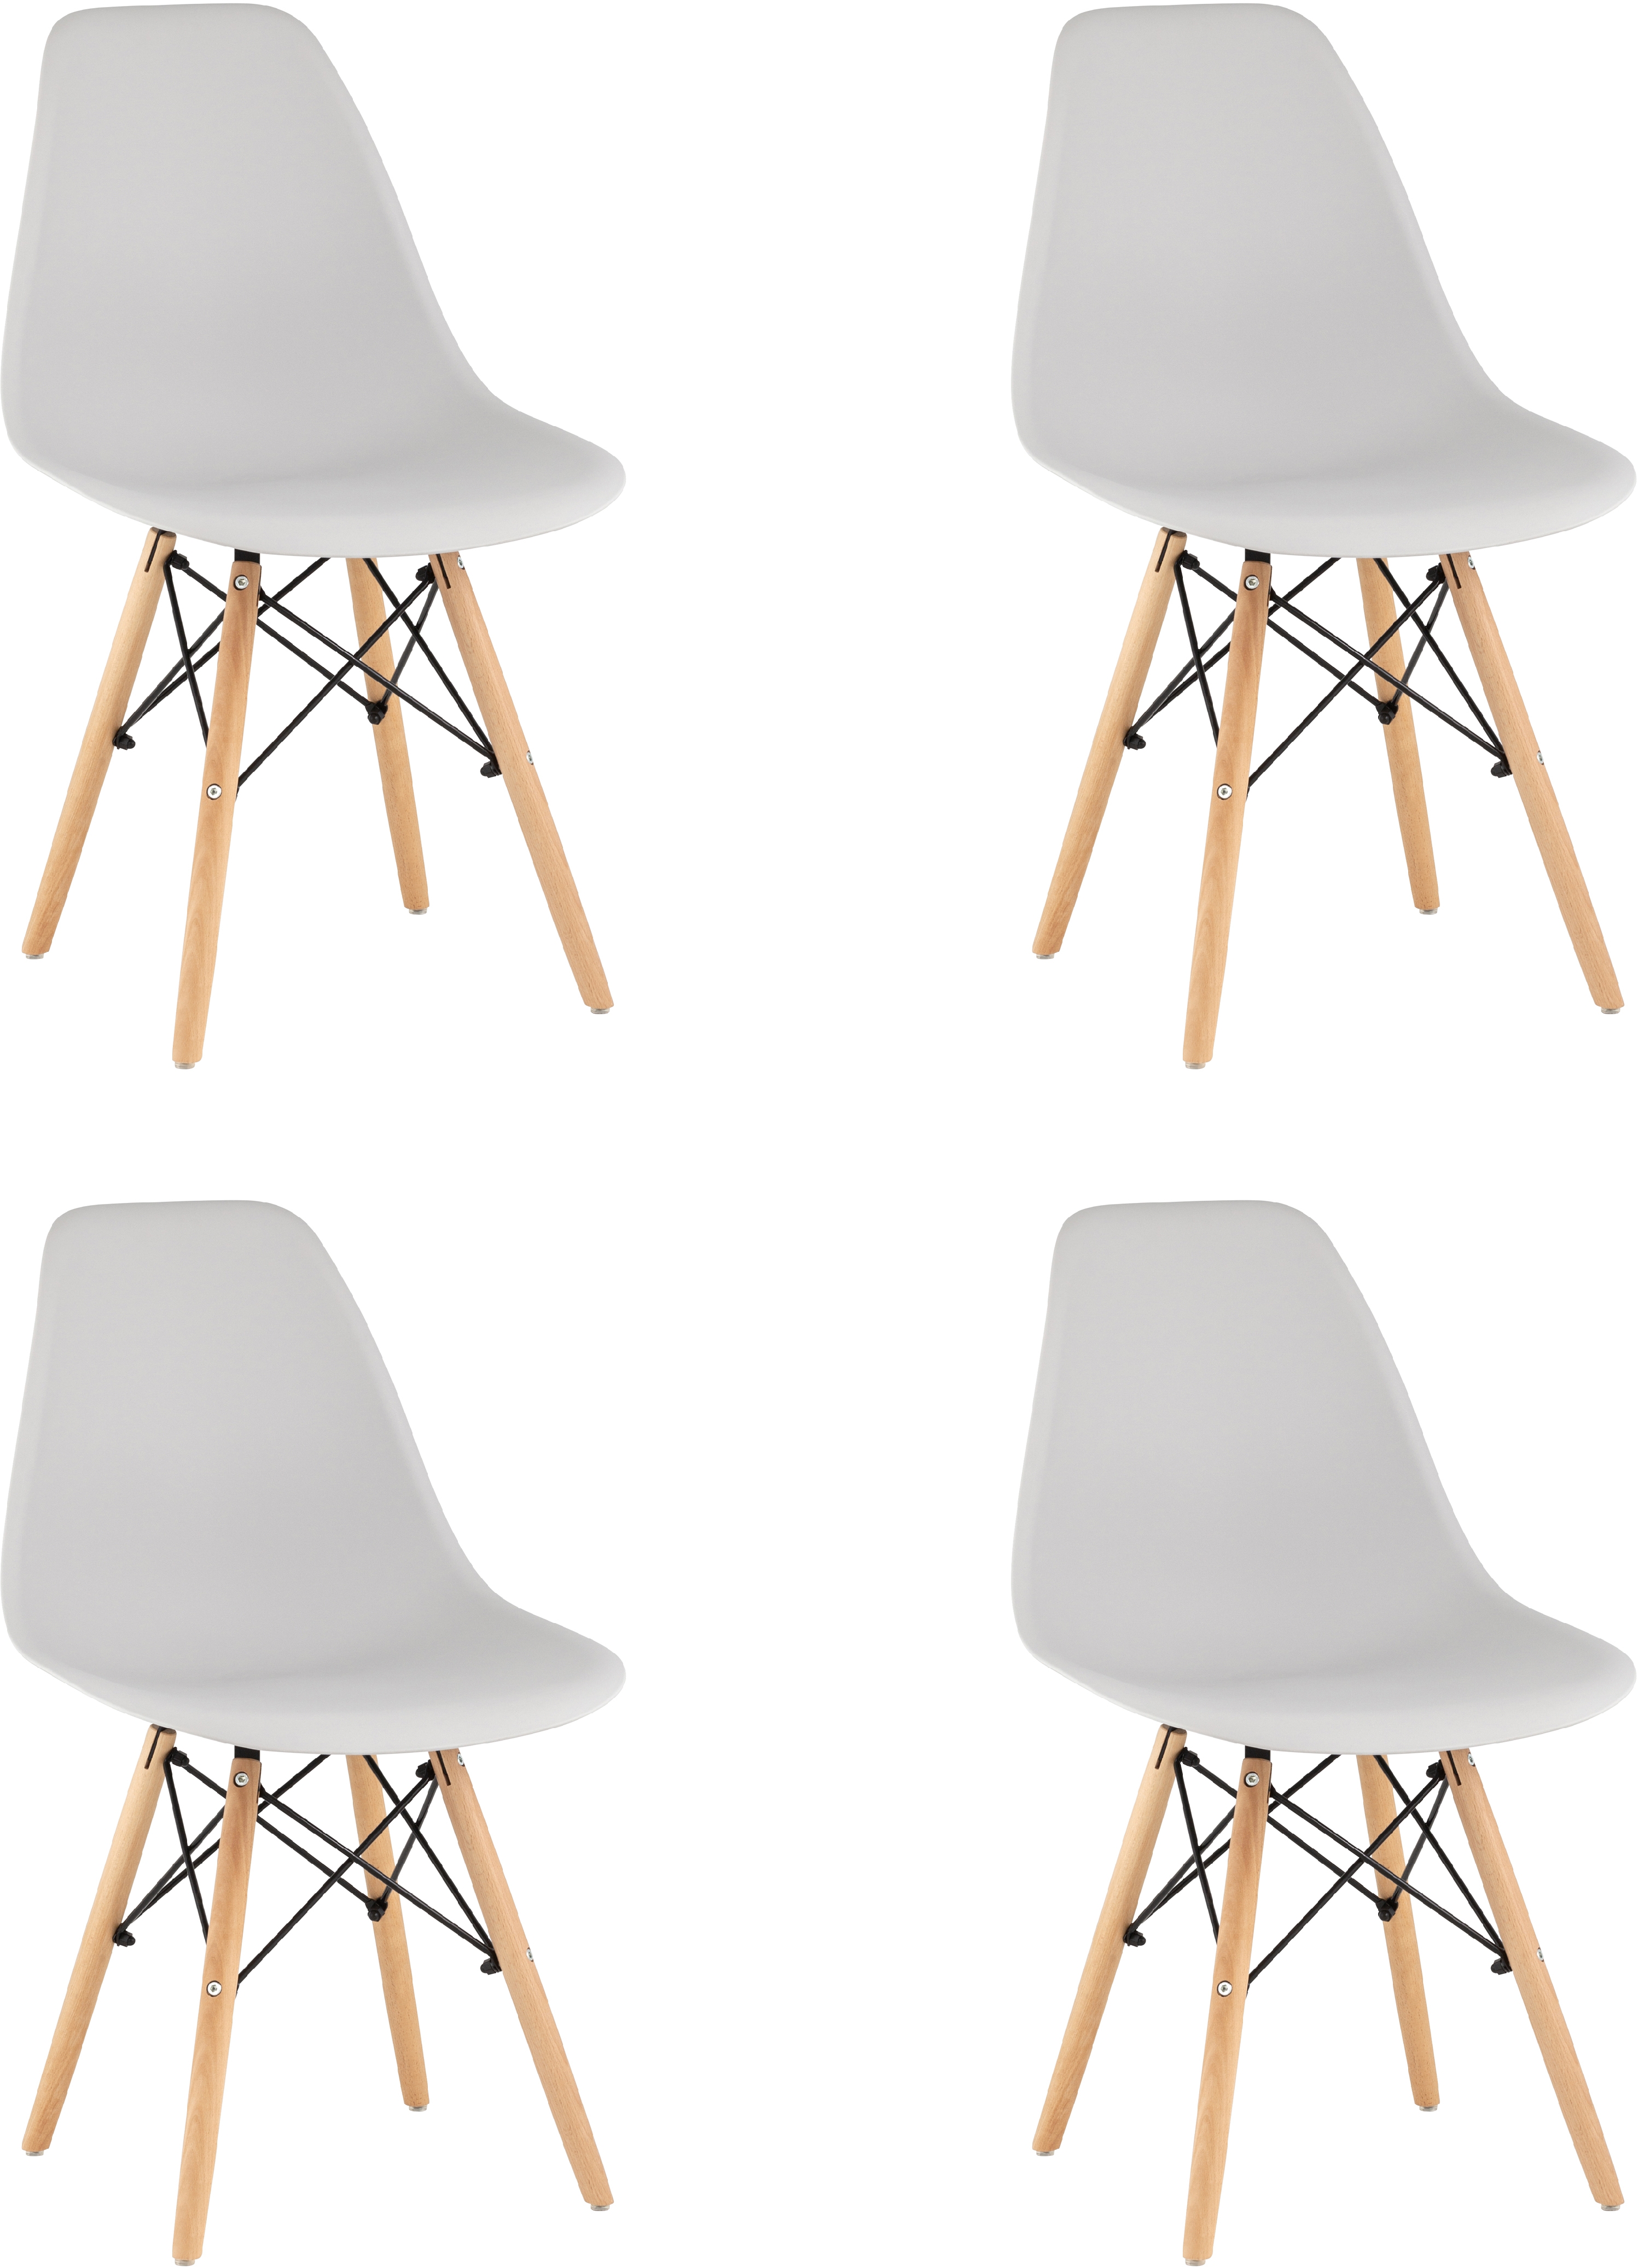 комплект стульев для кухни dsw style